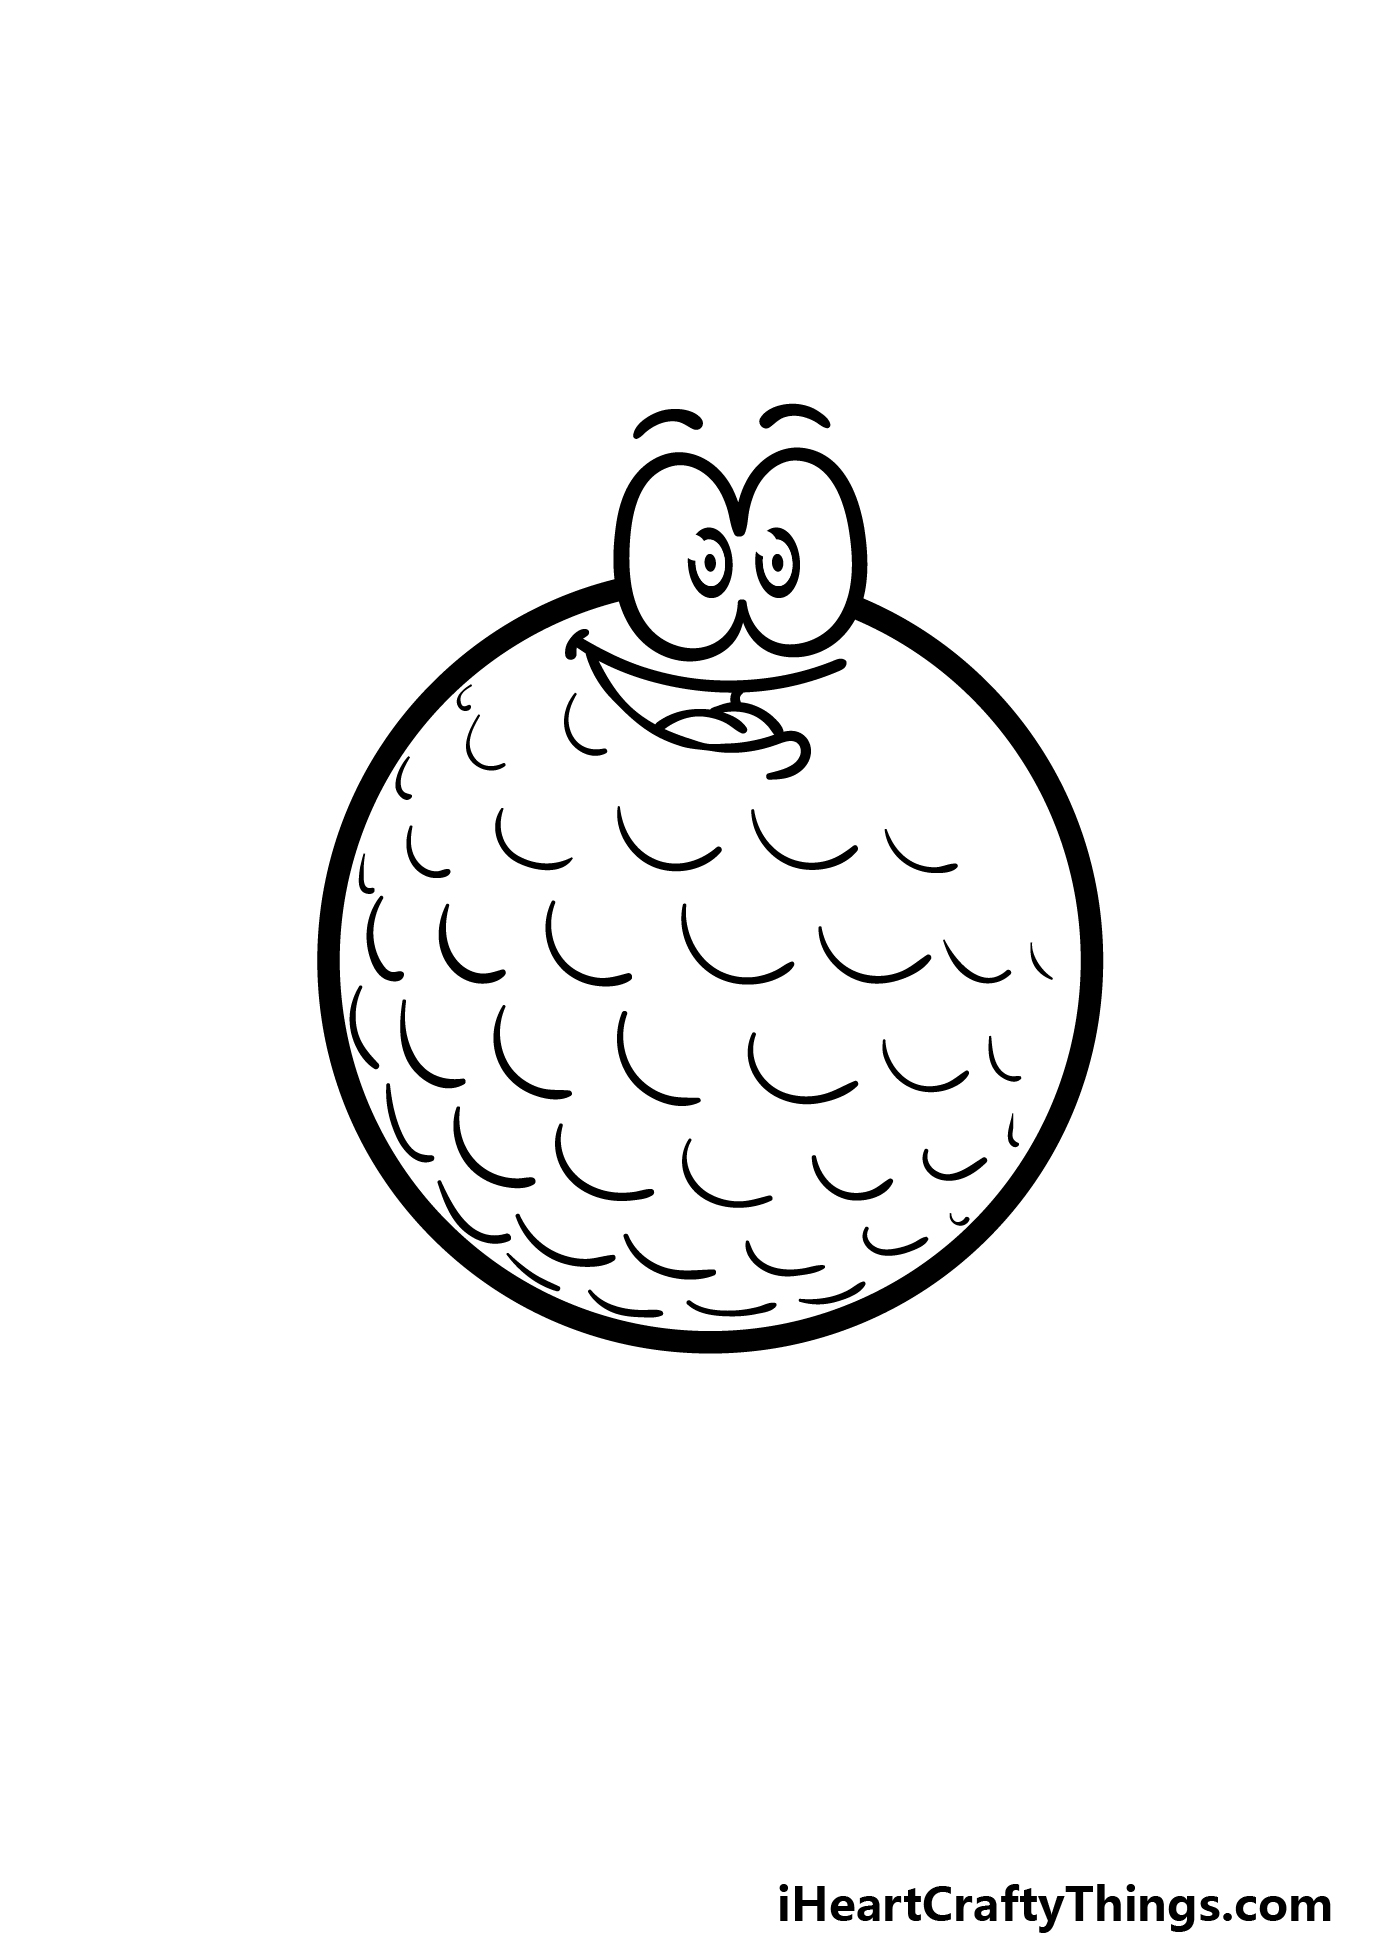 Cartoon Golf Ball Drawing - How To Draw A Cartoon Golf Ball Step By Step